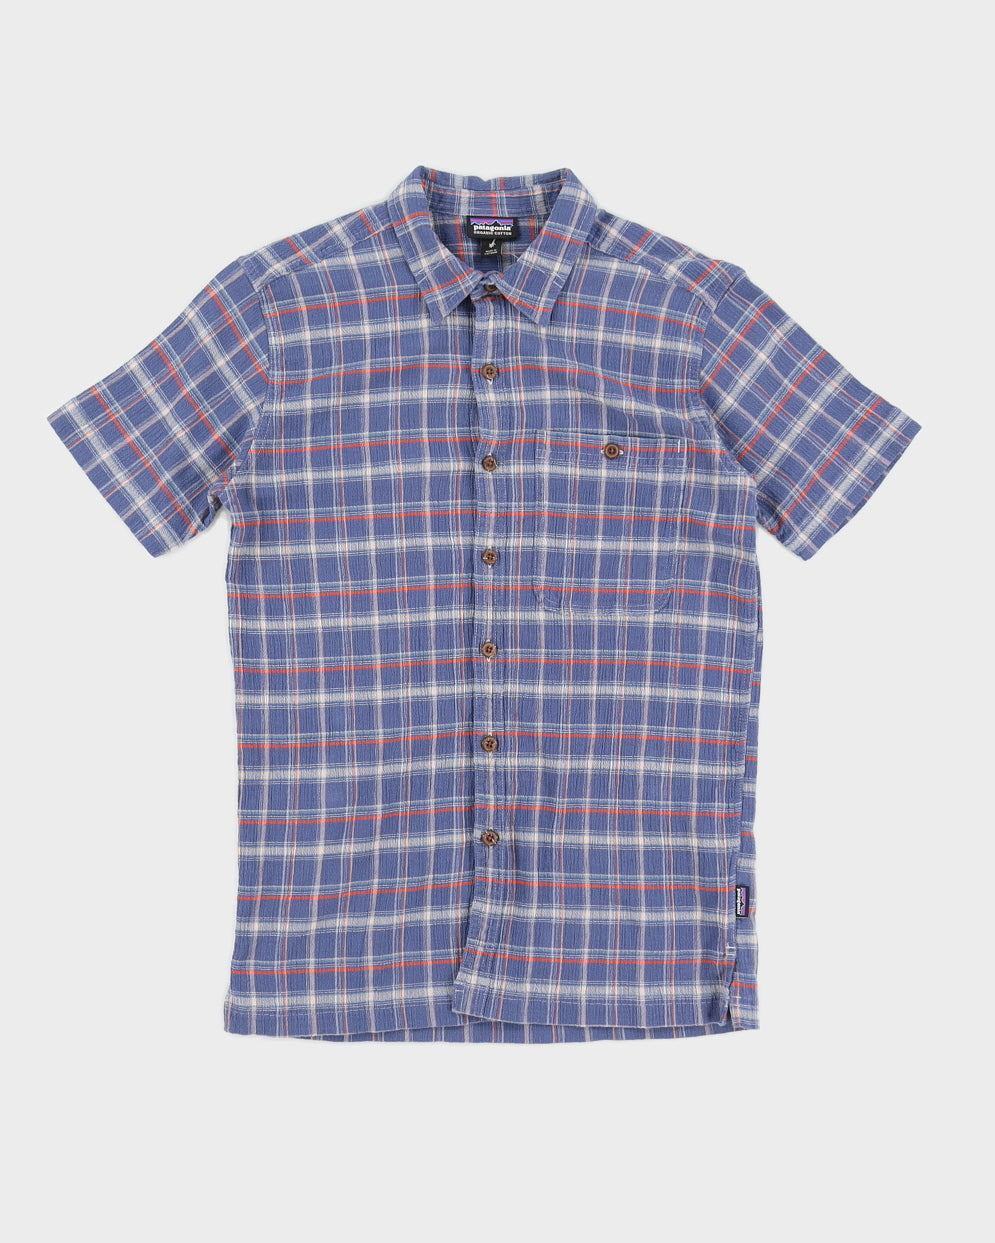 Patagonia Blue Checked Organic Cotton & Hemp Short Sleeved Shirt - XS